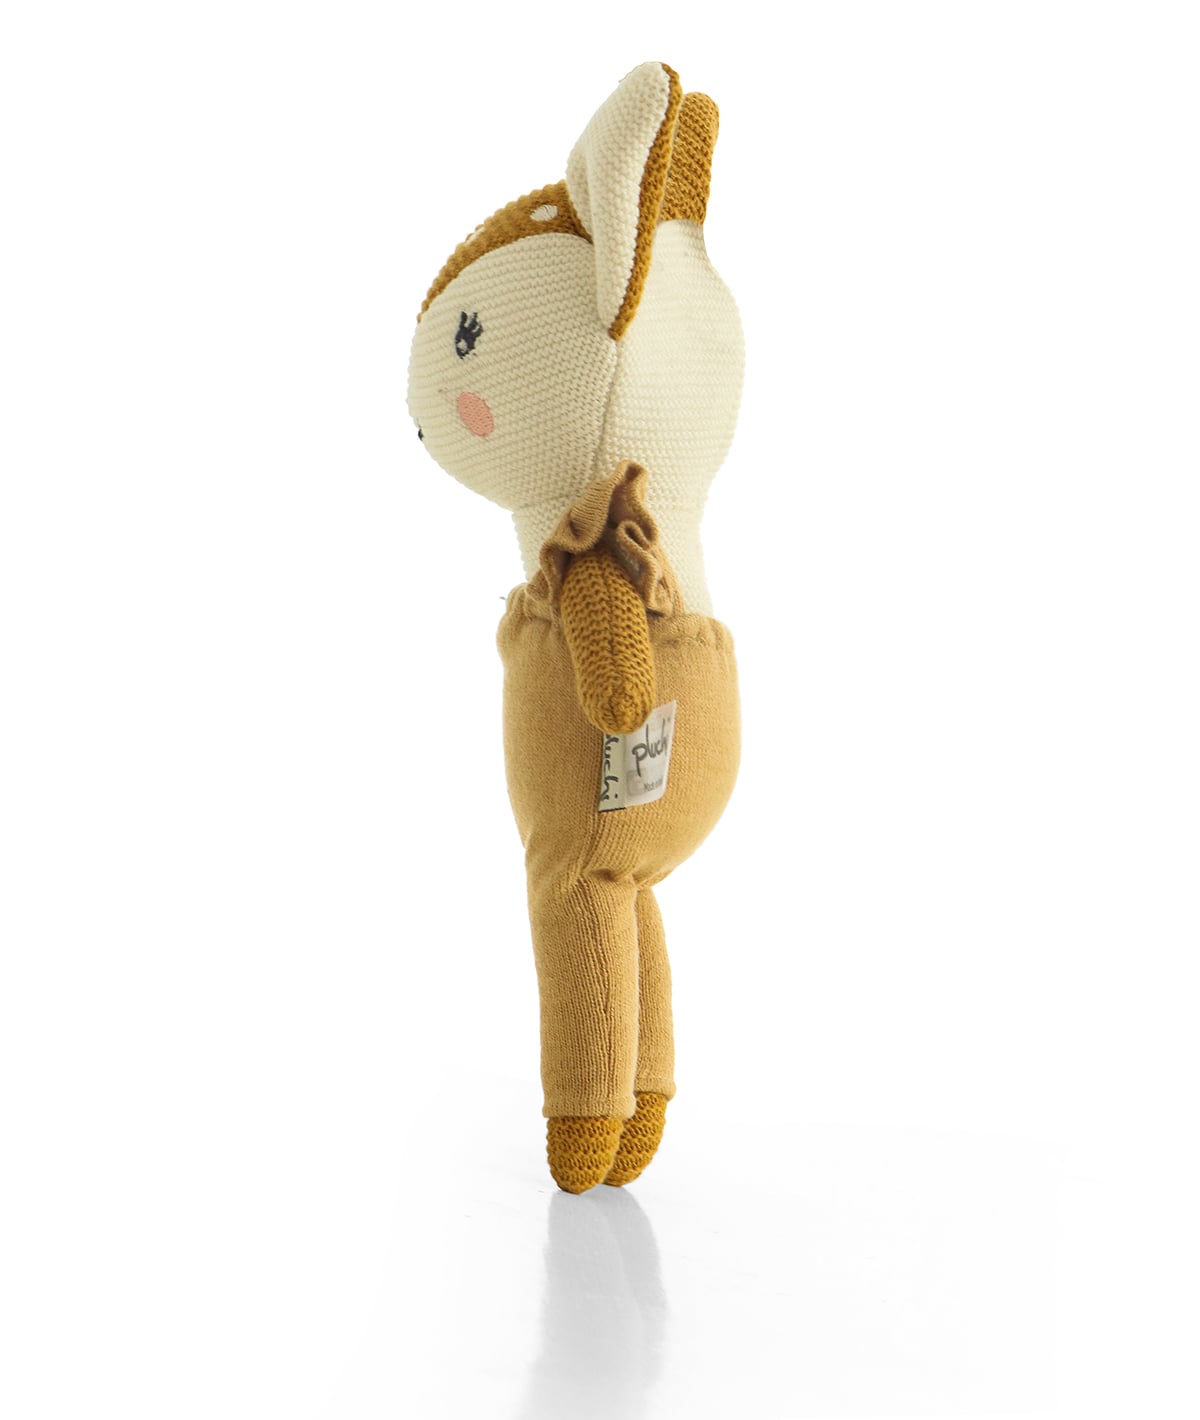 Classy Fox-  Cotton Knitted Stuffed Soft Toy (Mustard & Ivory)